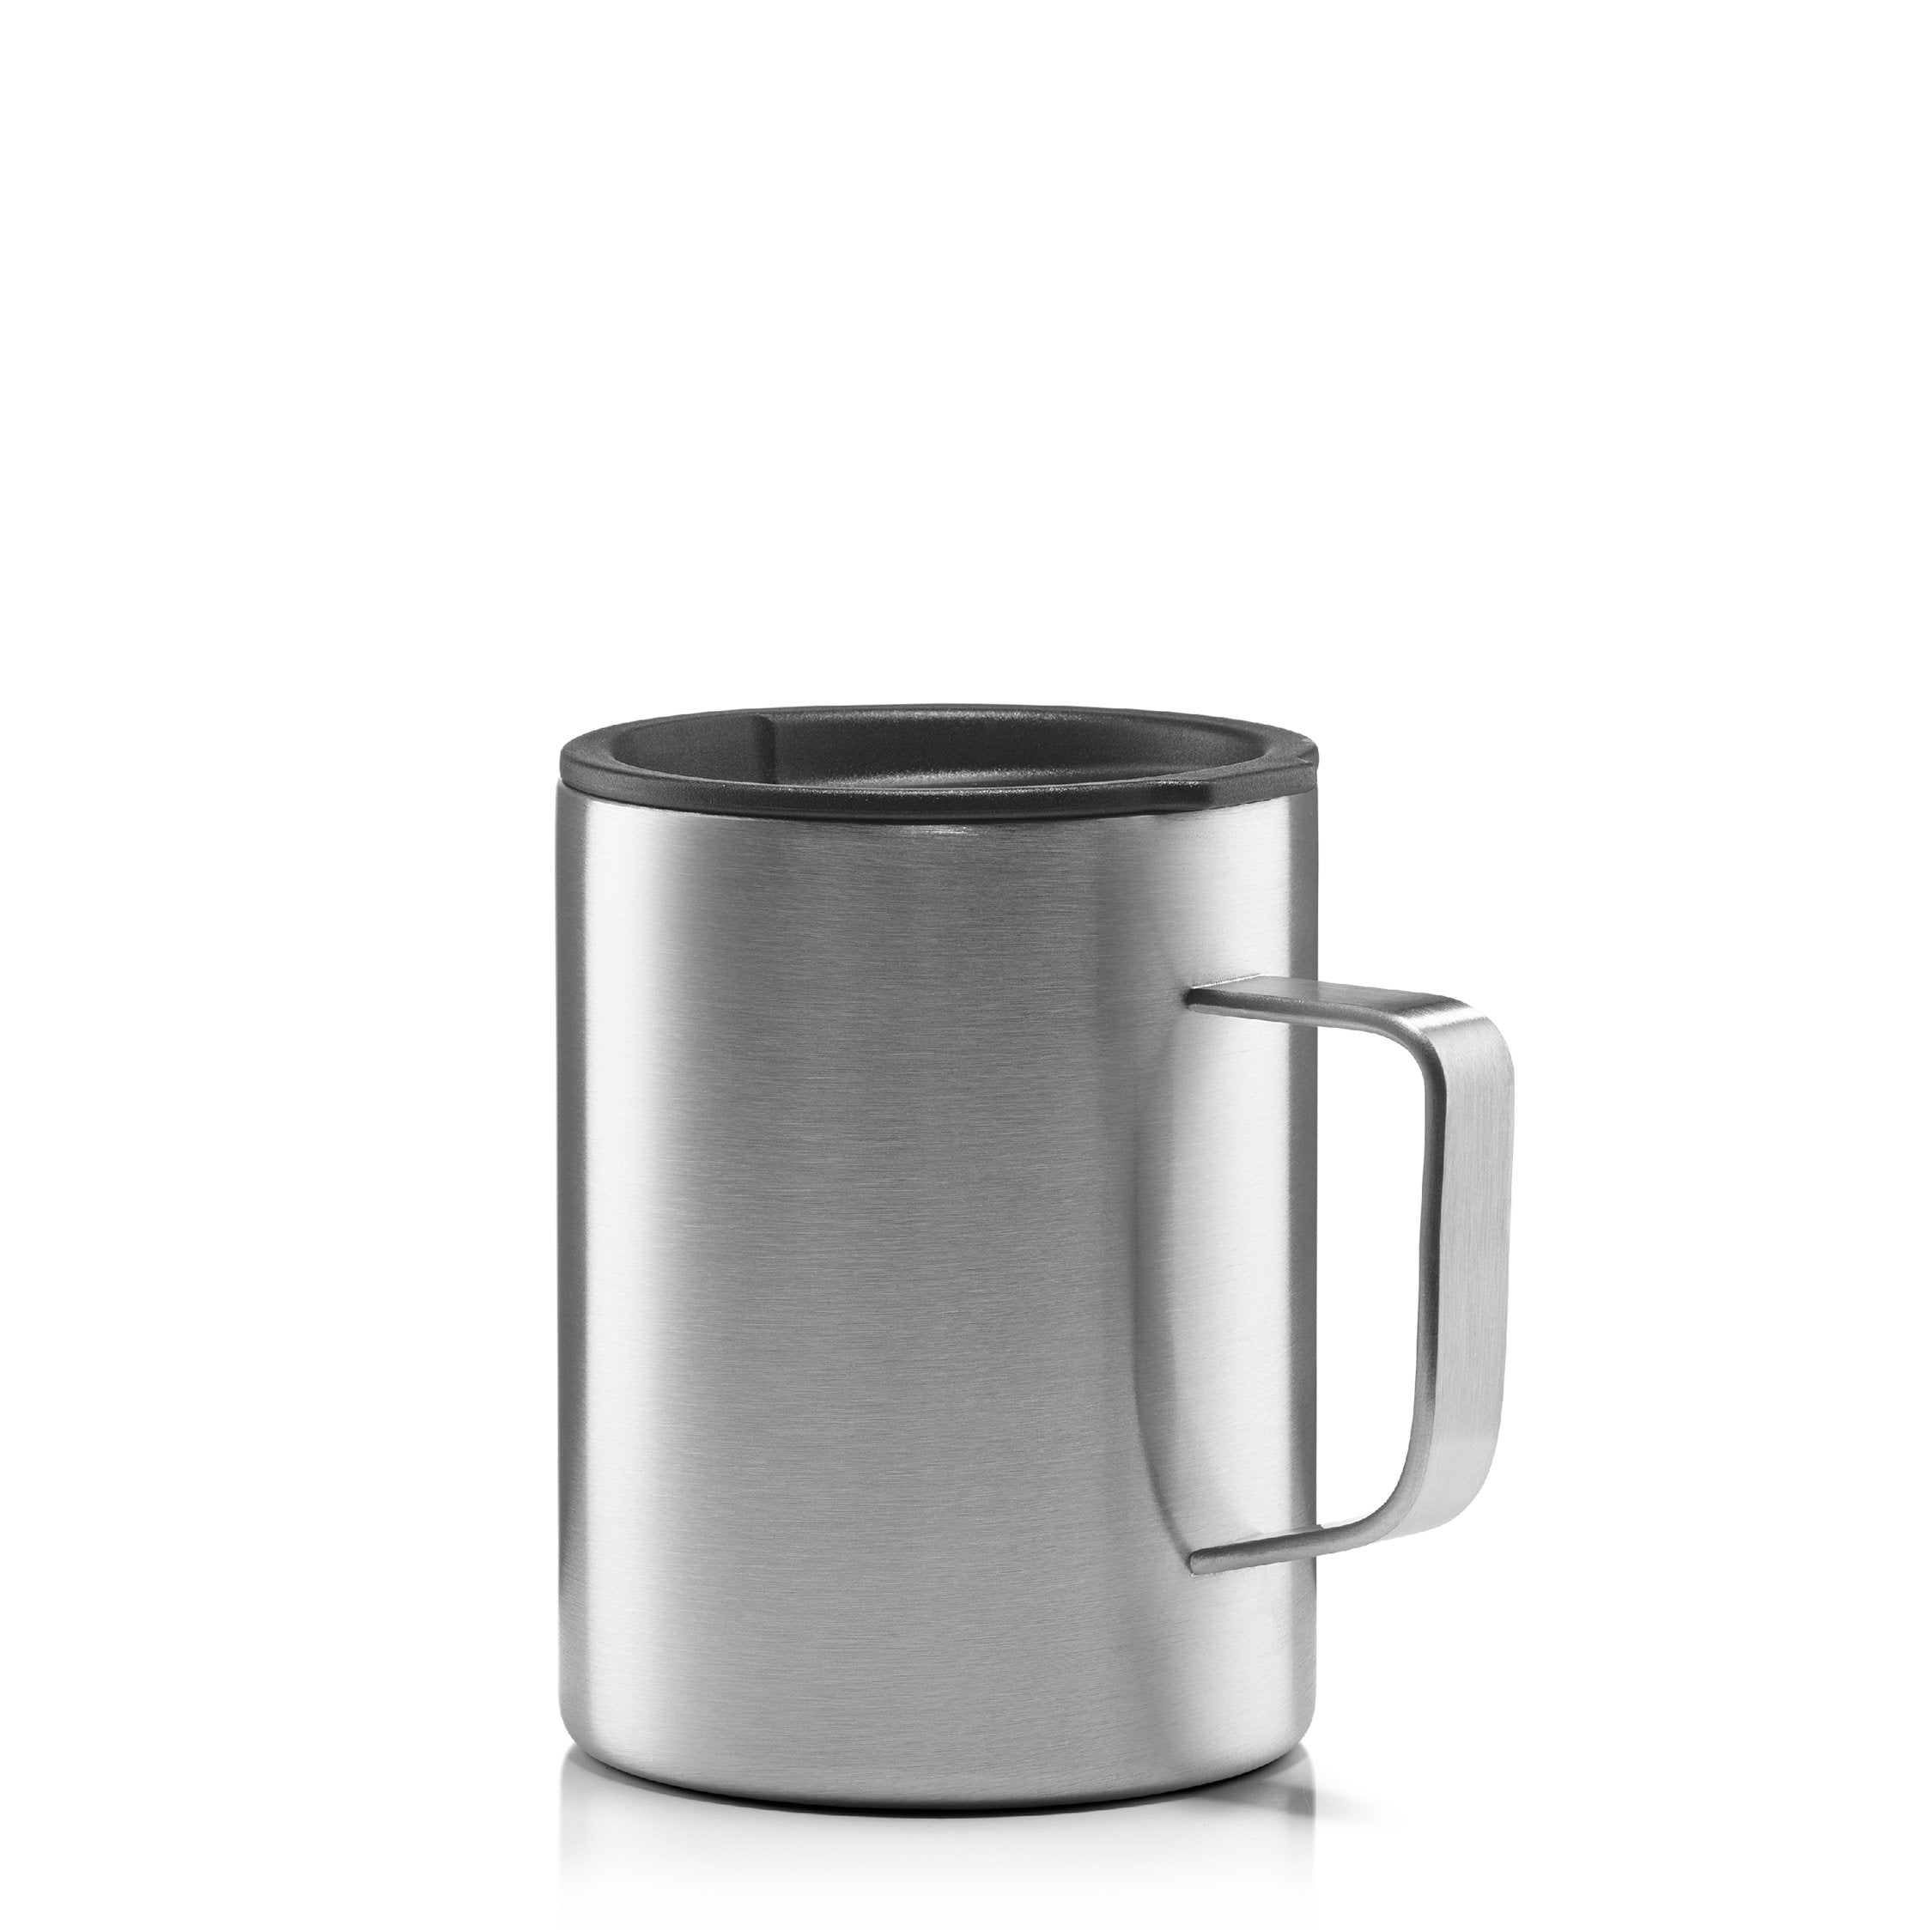 GRiZ x Miir® Brand PTYM Stainless Steel Travel Mug